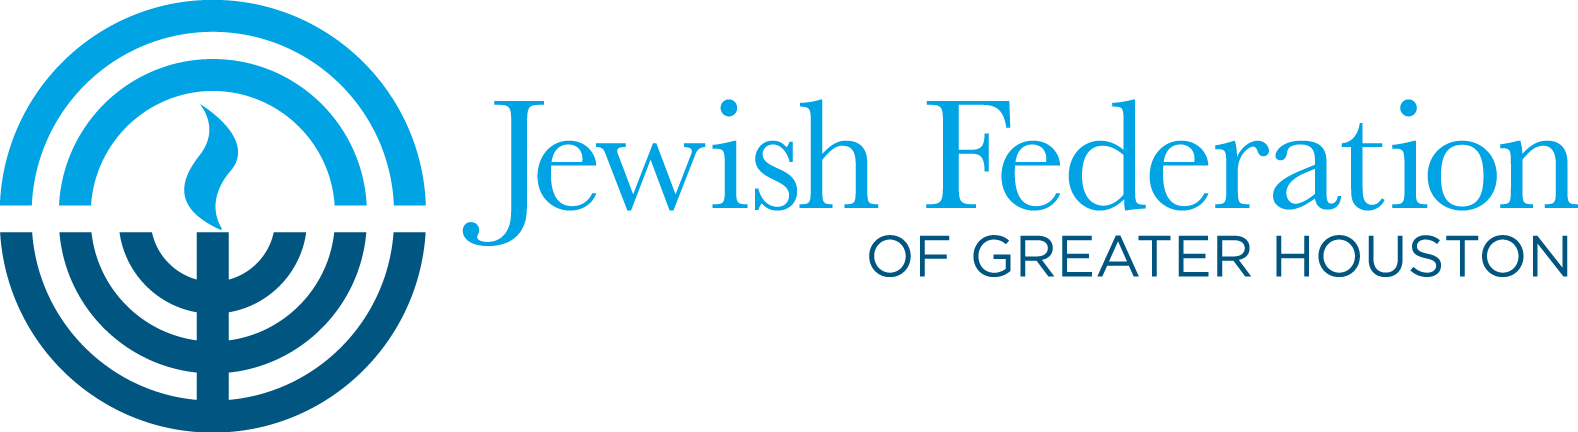 Jewish Logo - Branding and Logos | Jewish Federation of Greater Houston